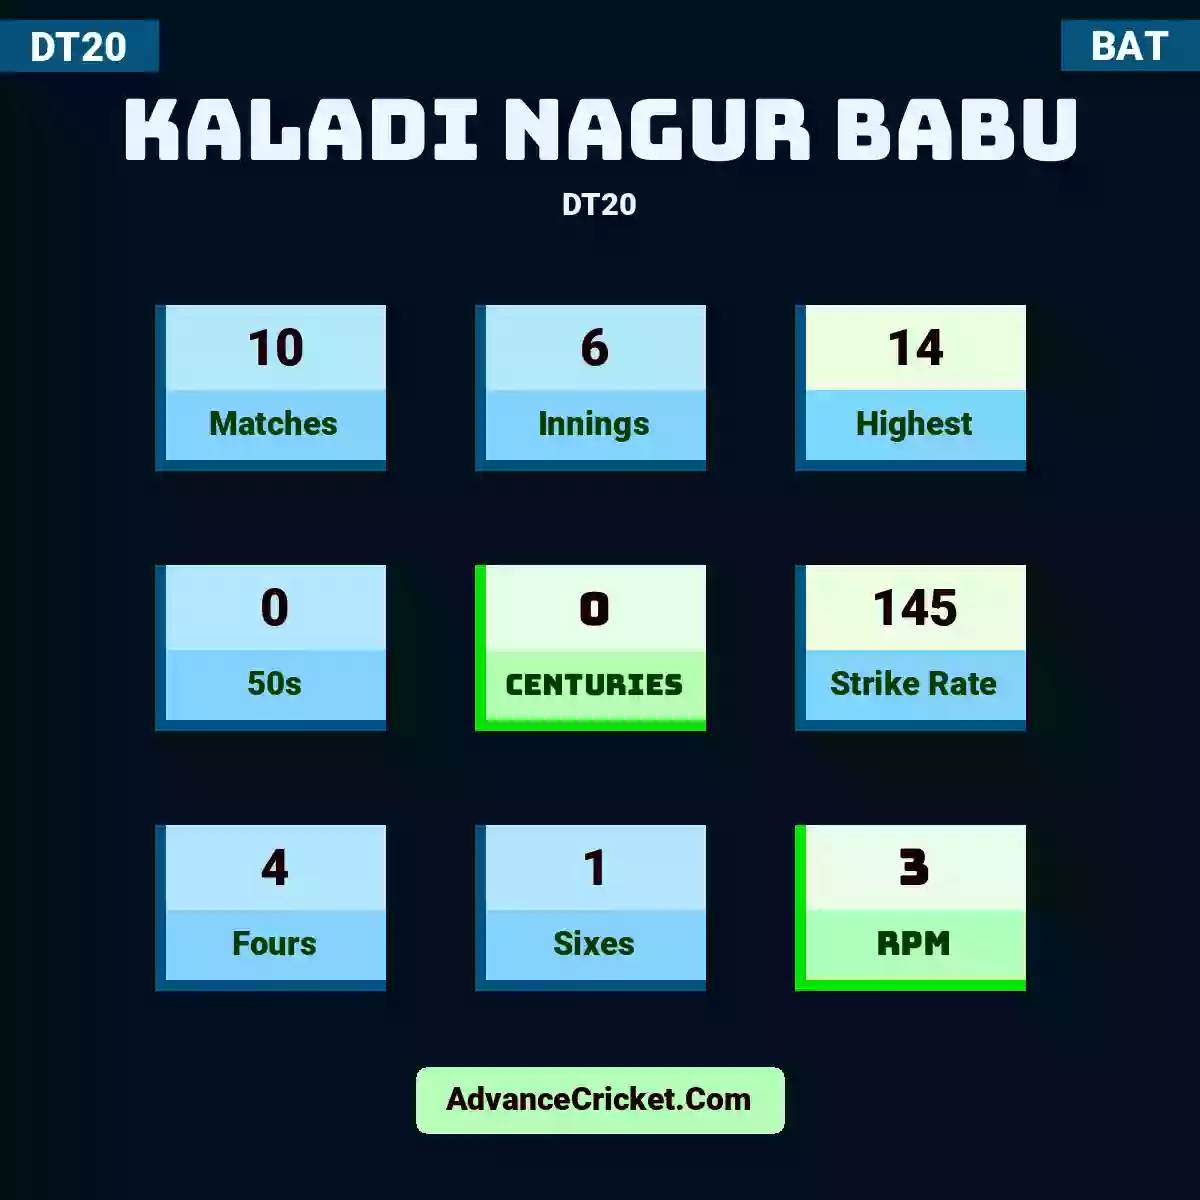 Kaladi Nagur Babu DT20 , Kaladi Nagur Babu played 10 matches, scored 14 runs as highest, 0 half-centuries, and 0 centuries, with a strike rate of 145. K.Babu hit 4 fours and 1 sixes, with an RPM of 3.